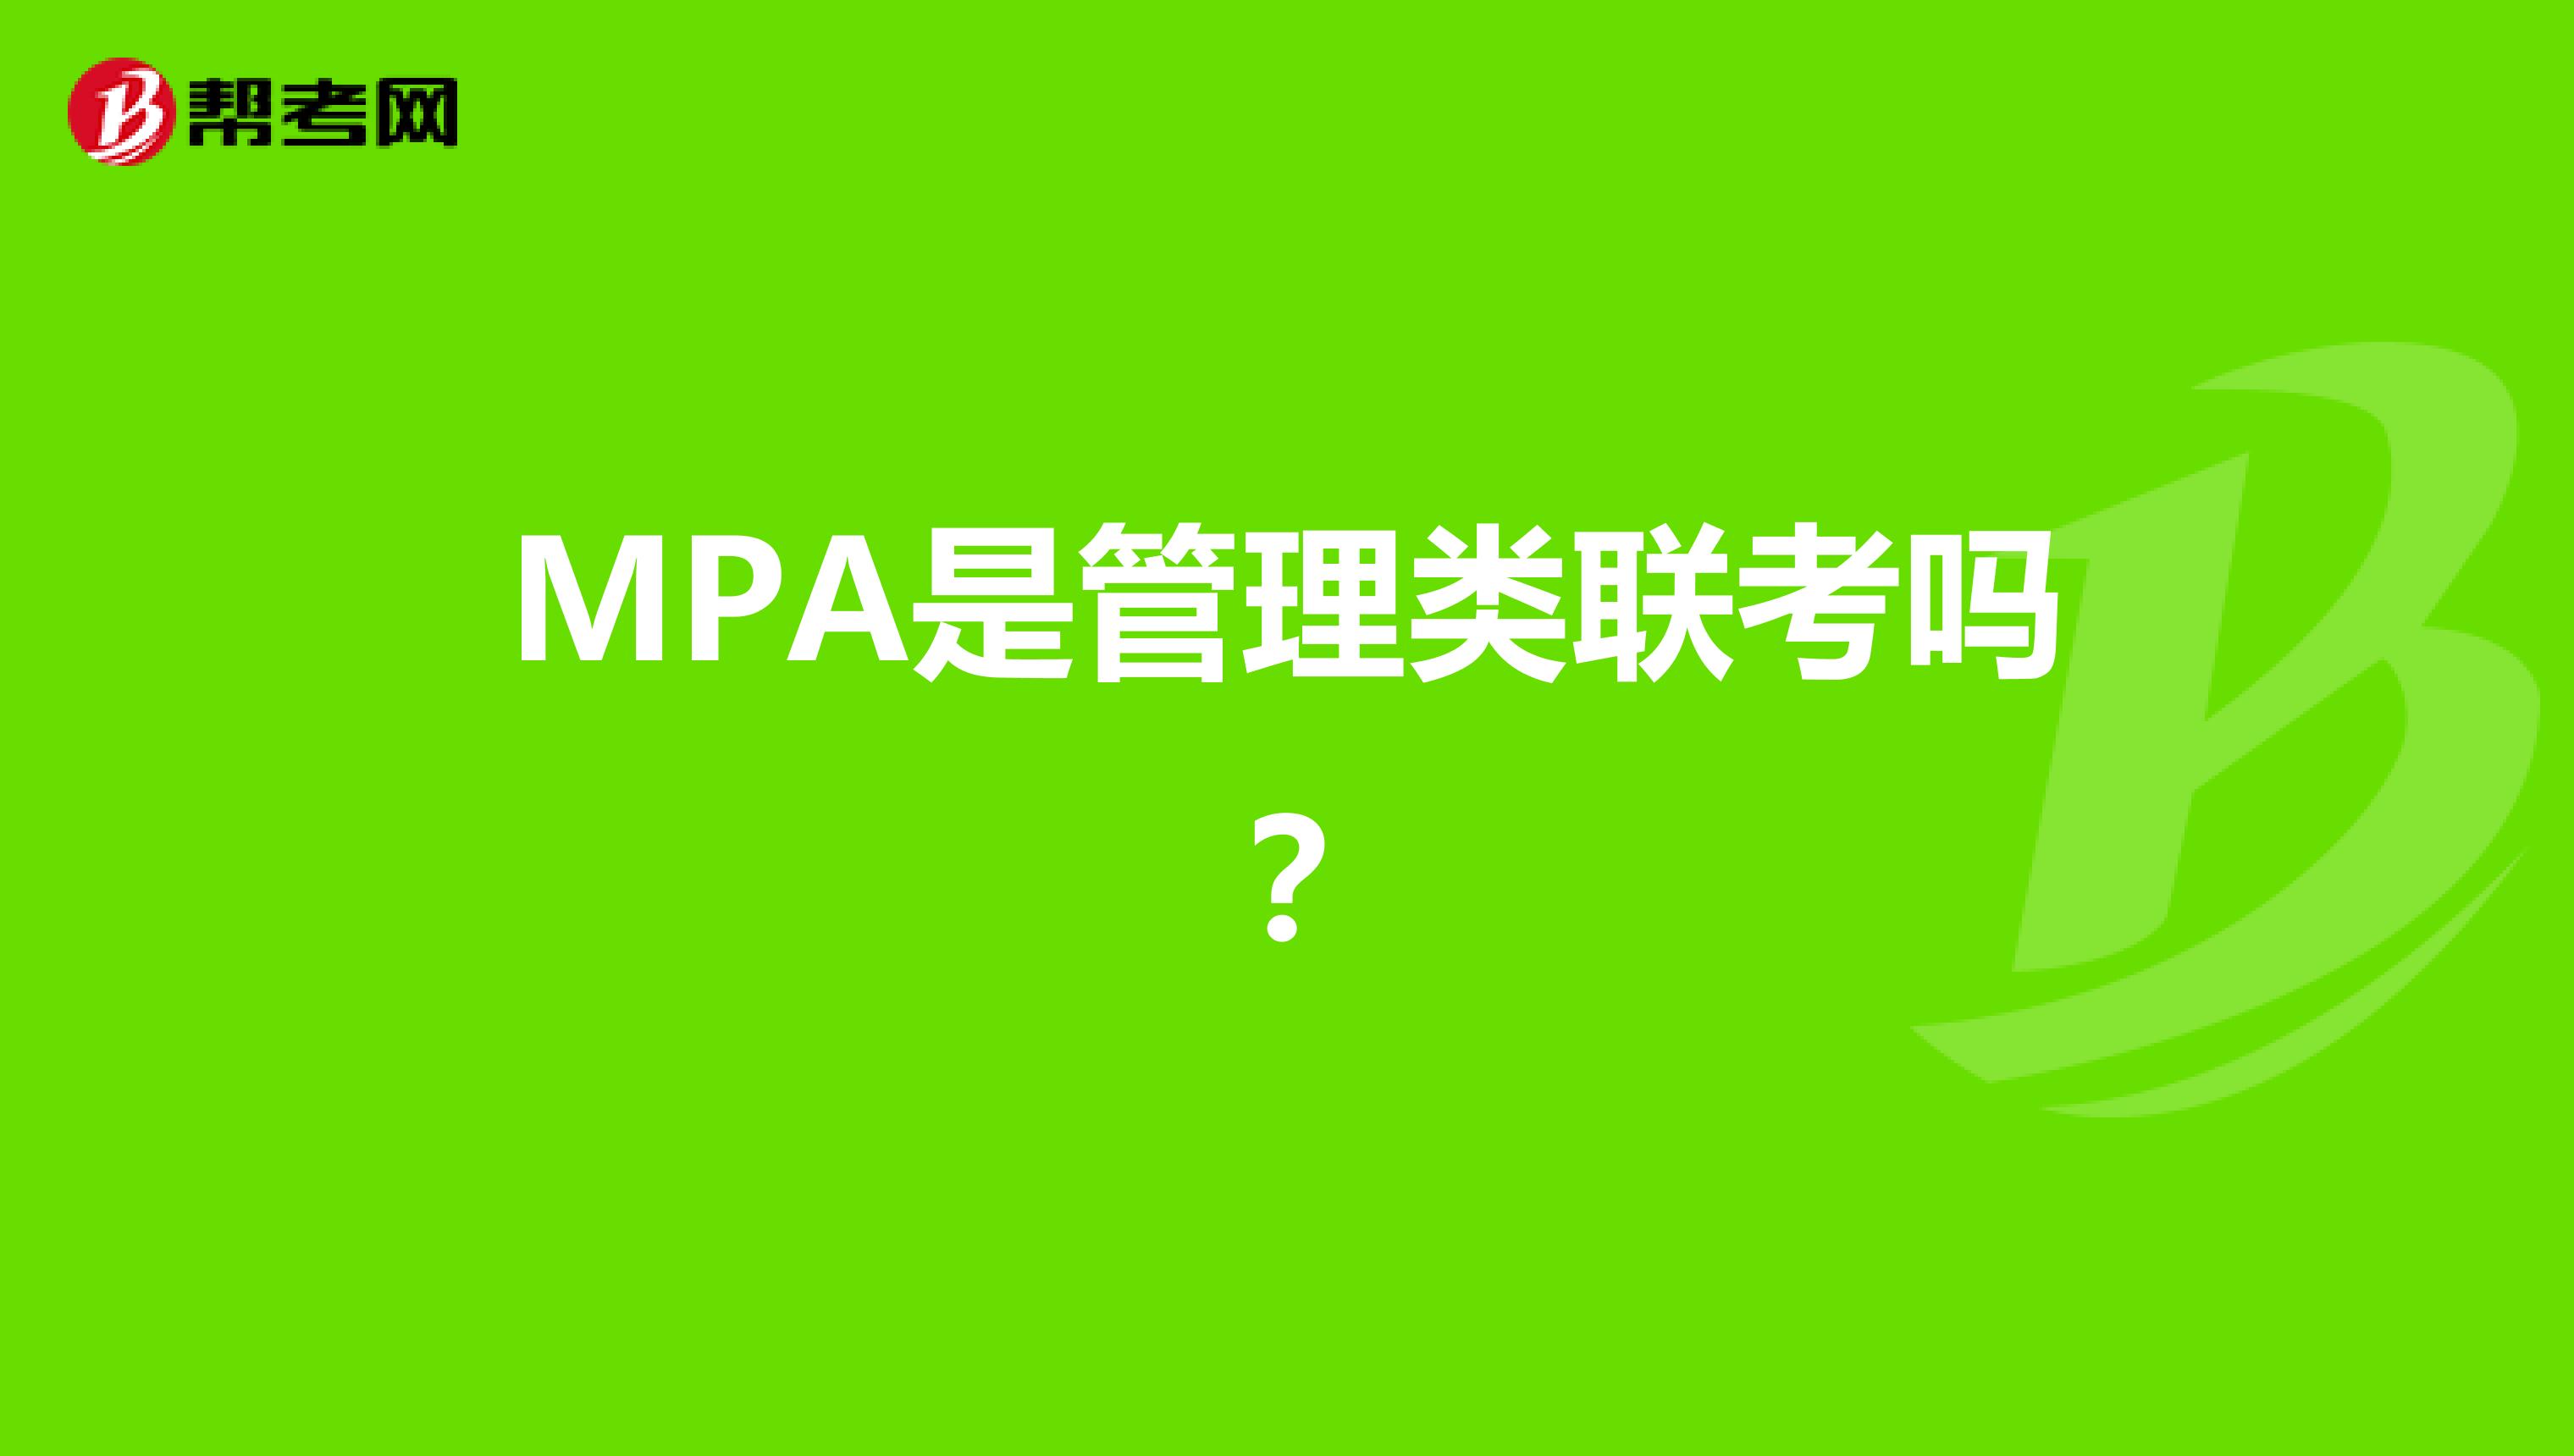 MPA是管理类联考吗？